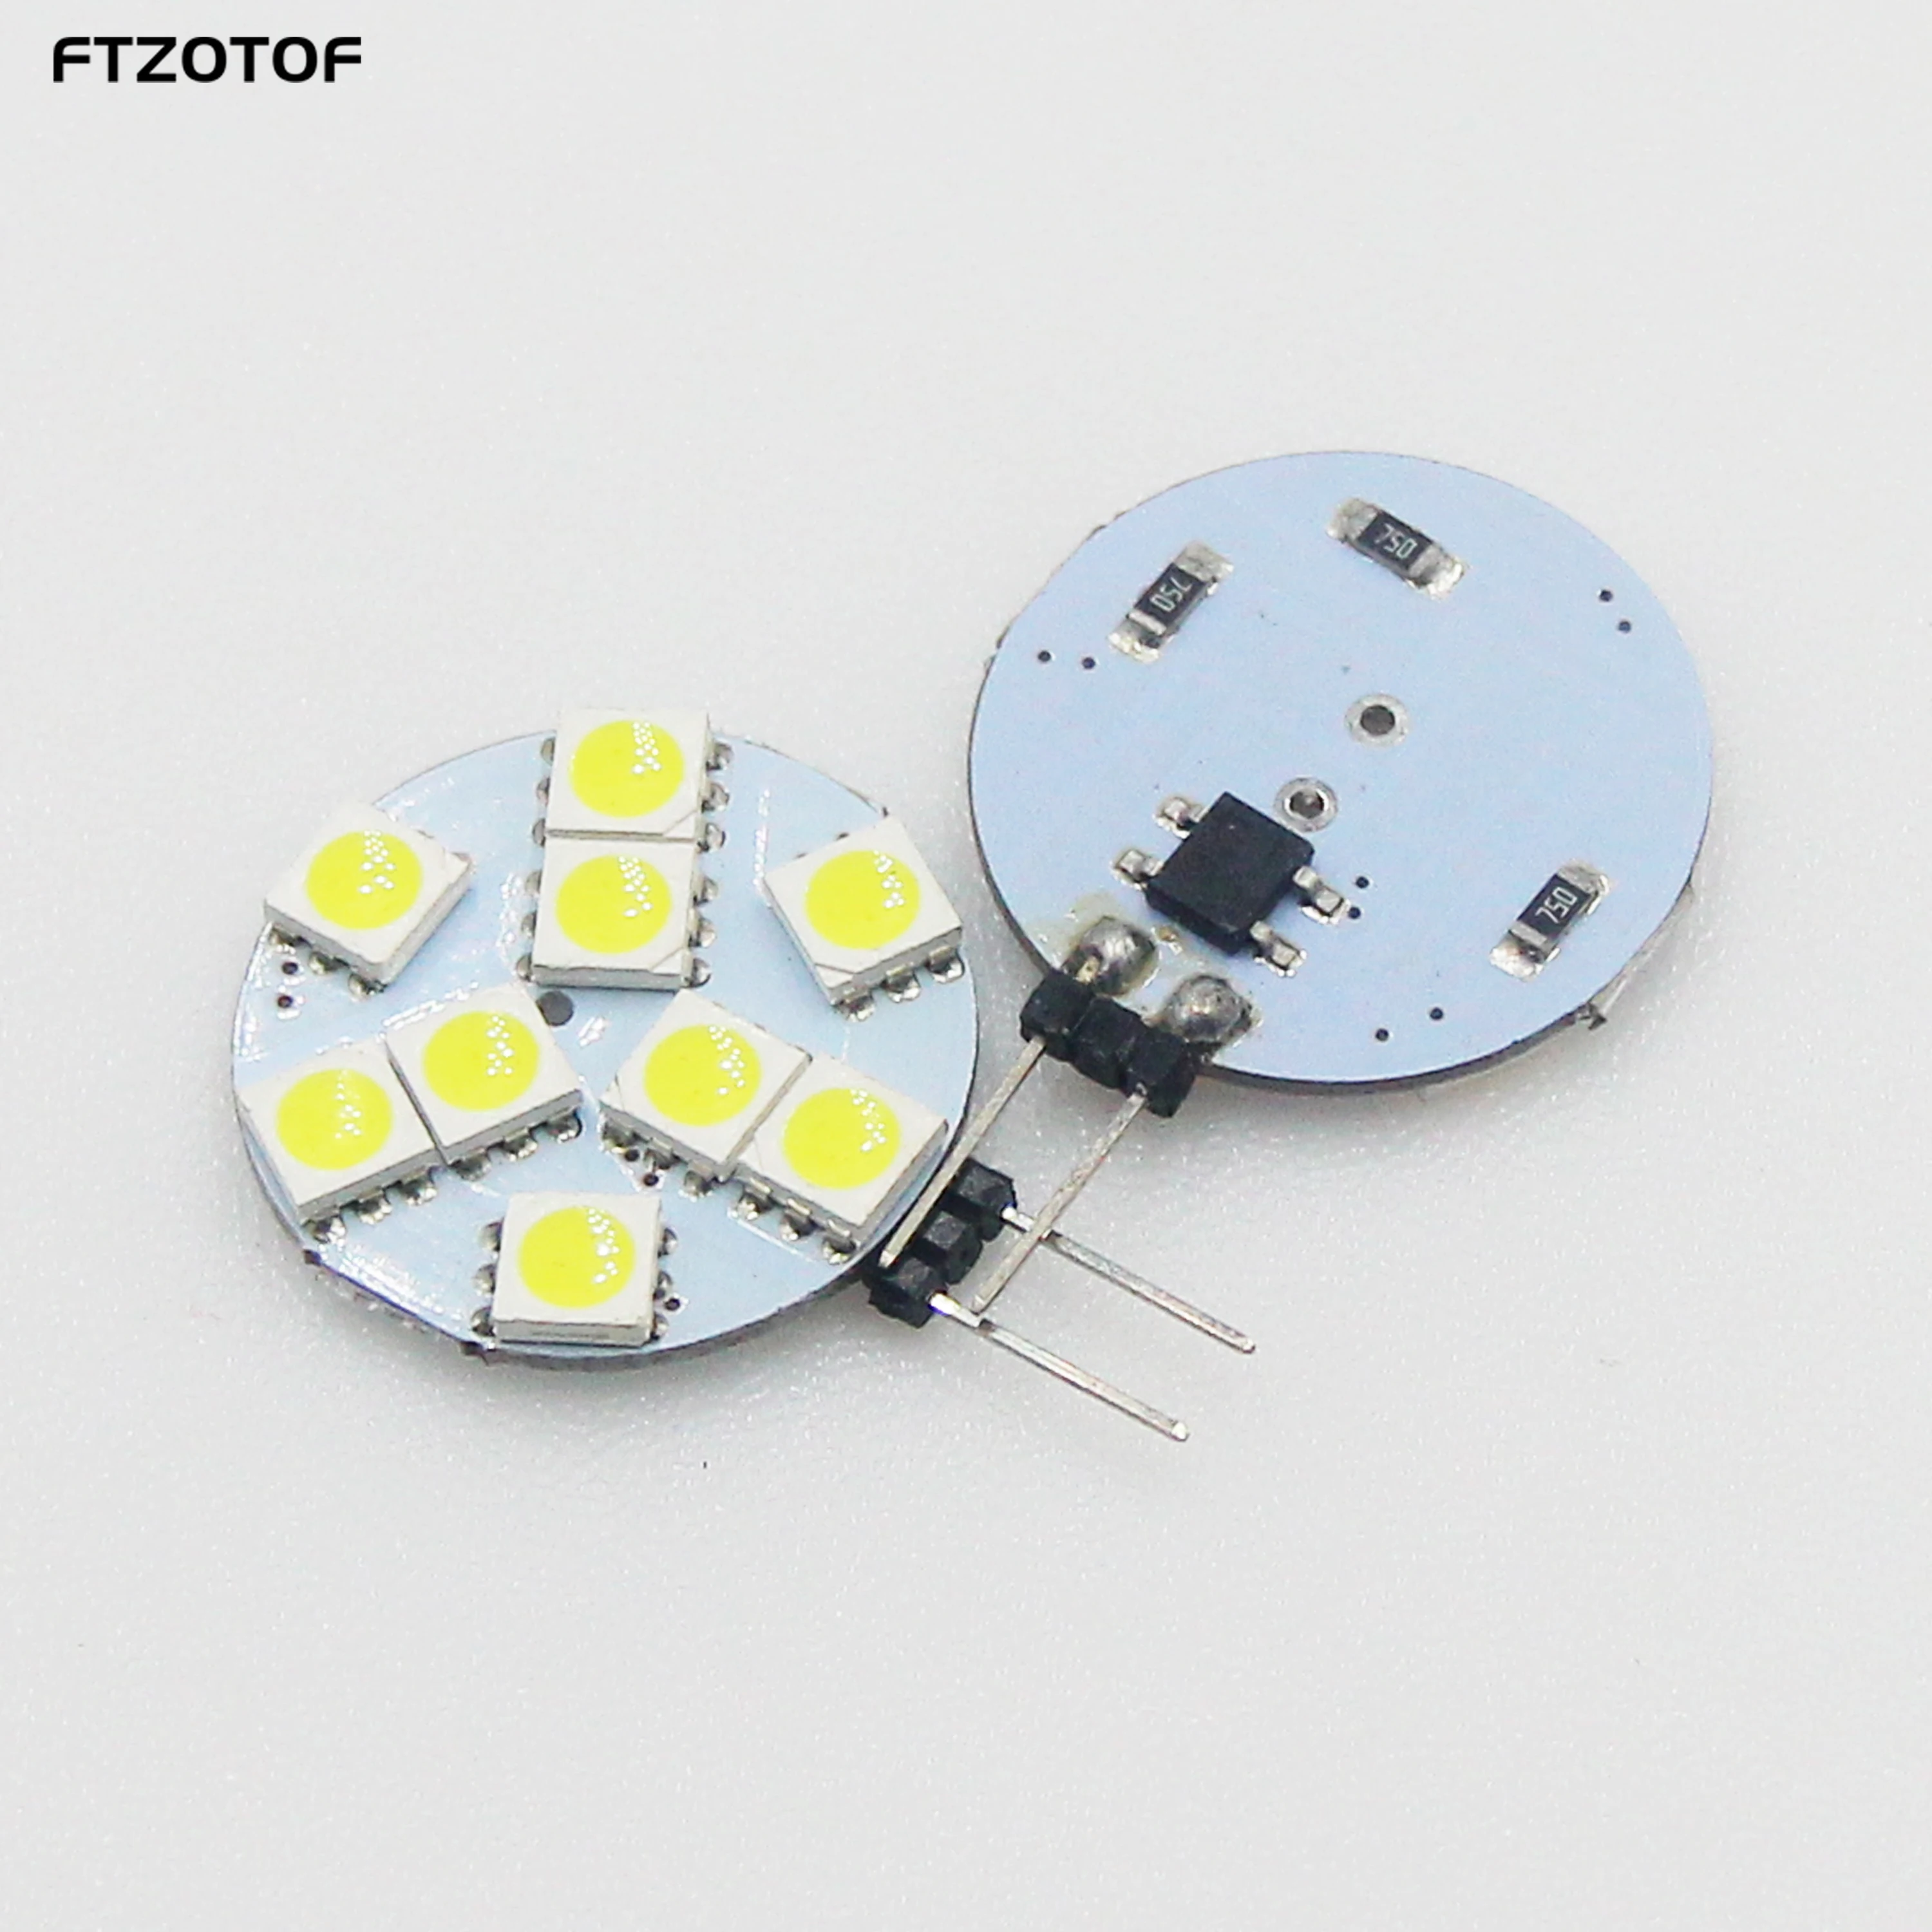 

FTZOTOF 2PCS/LOT COB LED 12V DC 5050 SMD Chip 1.8W G4 Socket 9 Bulbs Cool Warm White 3000K 6500K Light Source For Halogen Lamps